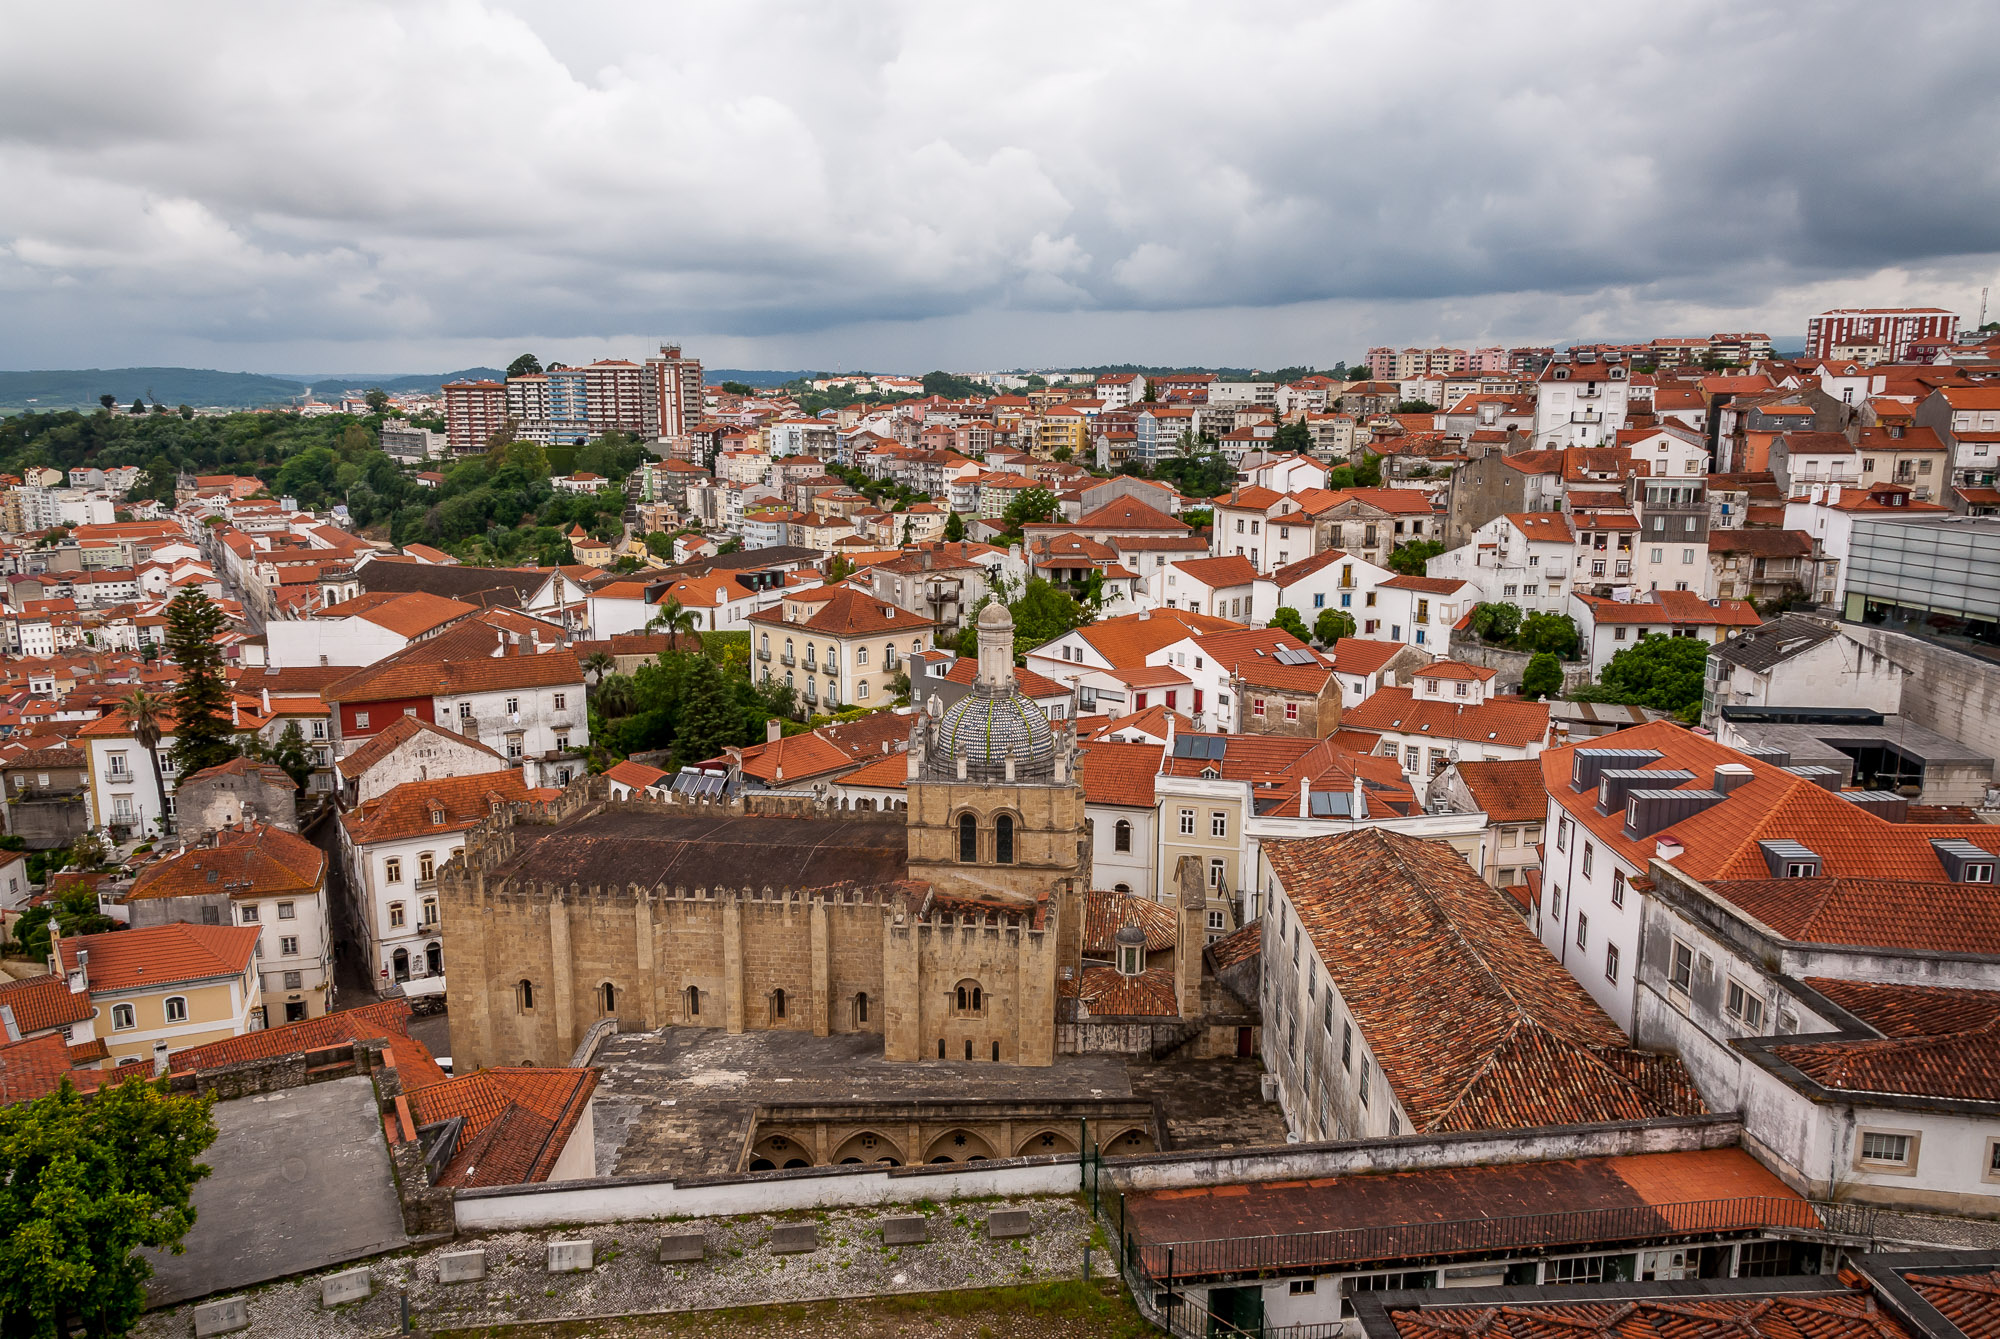 Coimbra view